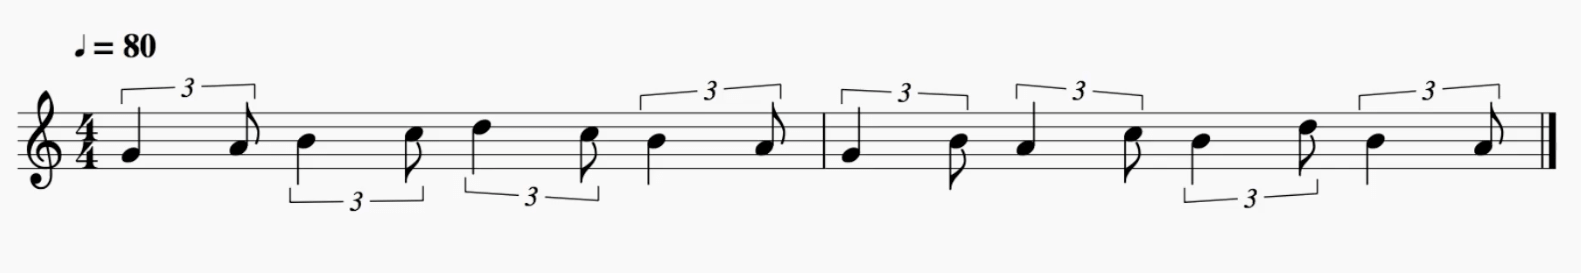 Shuffle och swing notes 1